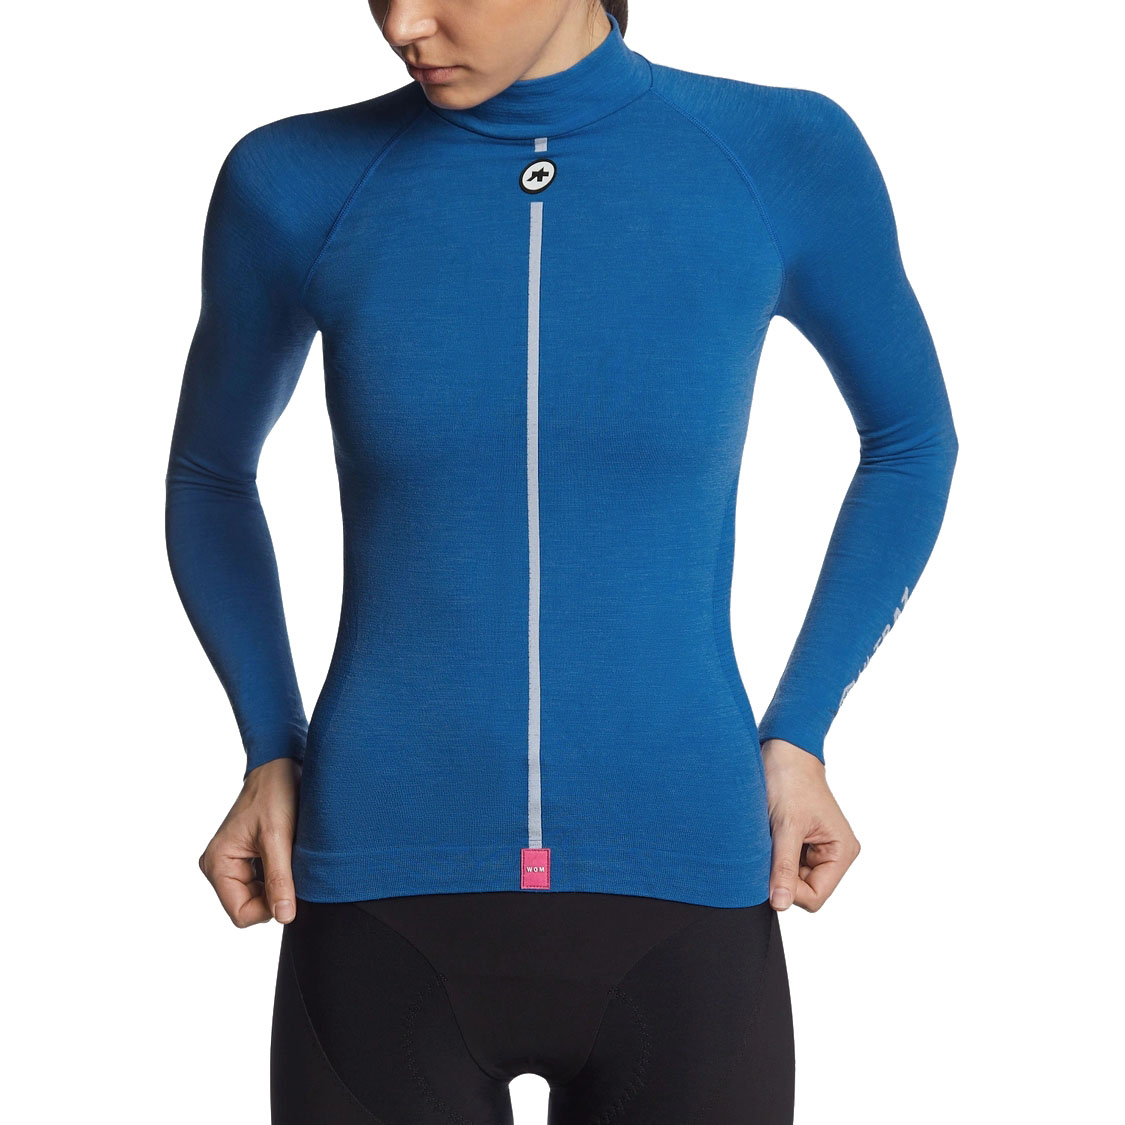 Produktbild von Assos Ultraz Skin Layer Winter Damen Langarm - Unterhemd - Calypso Blu